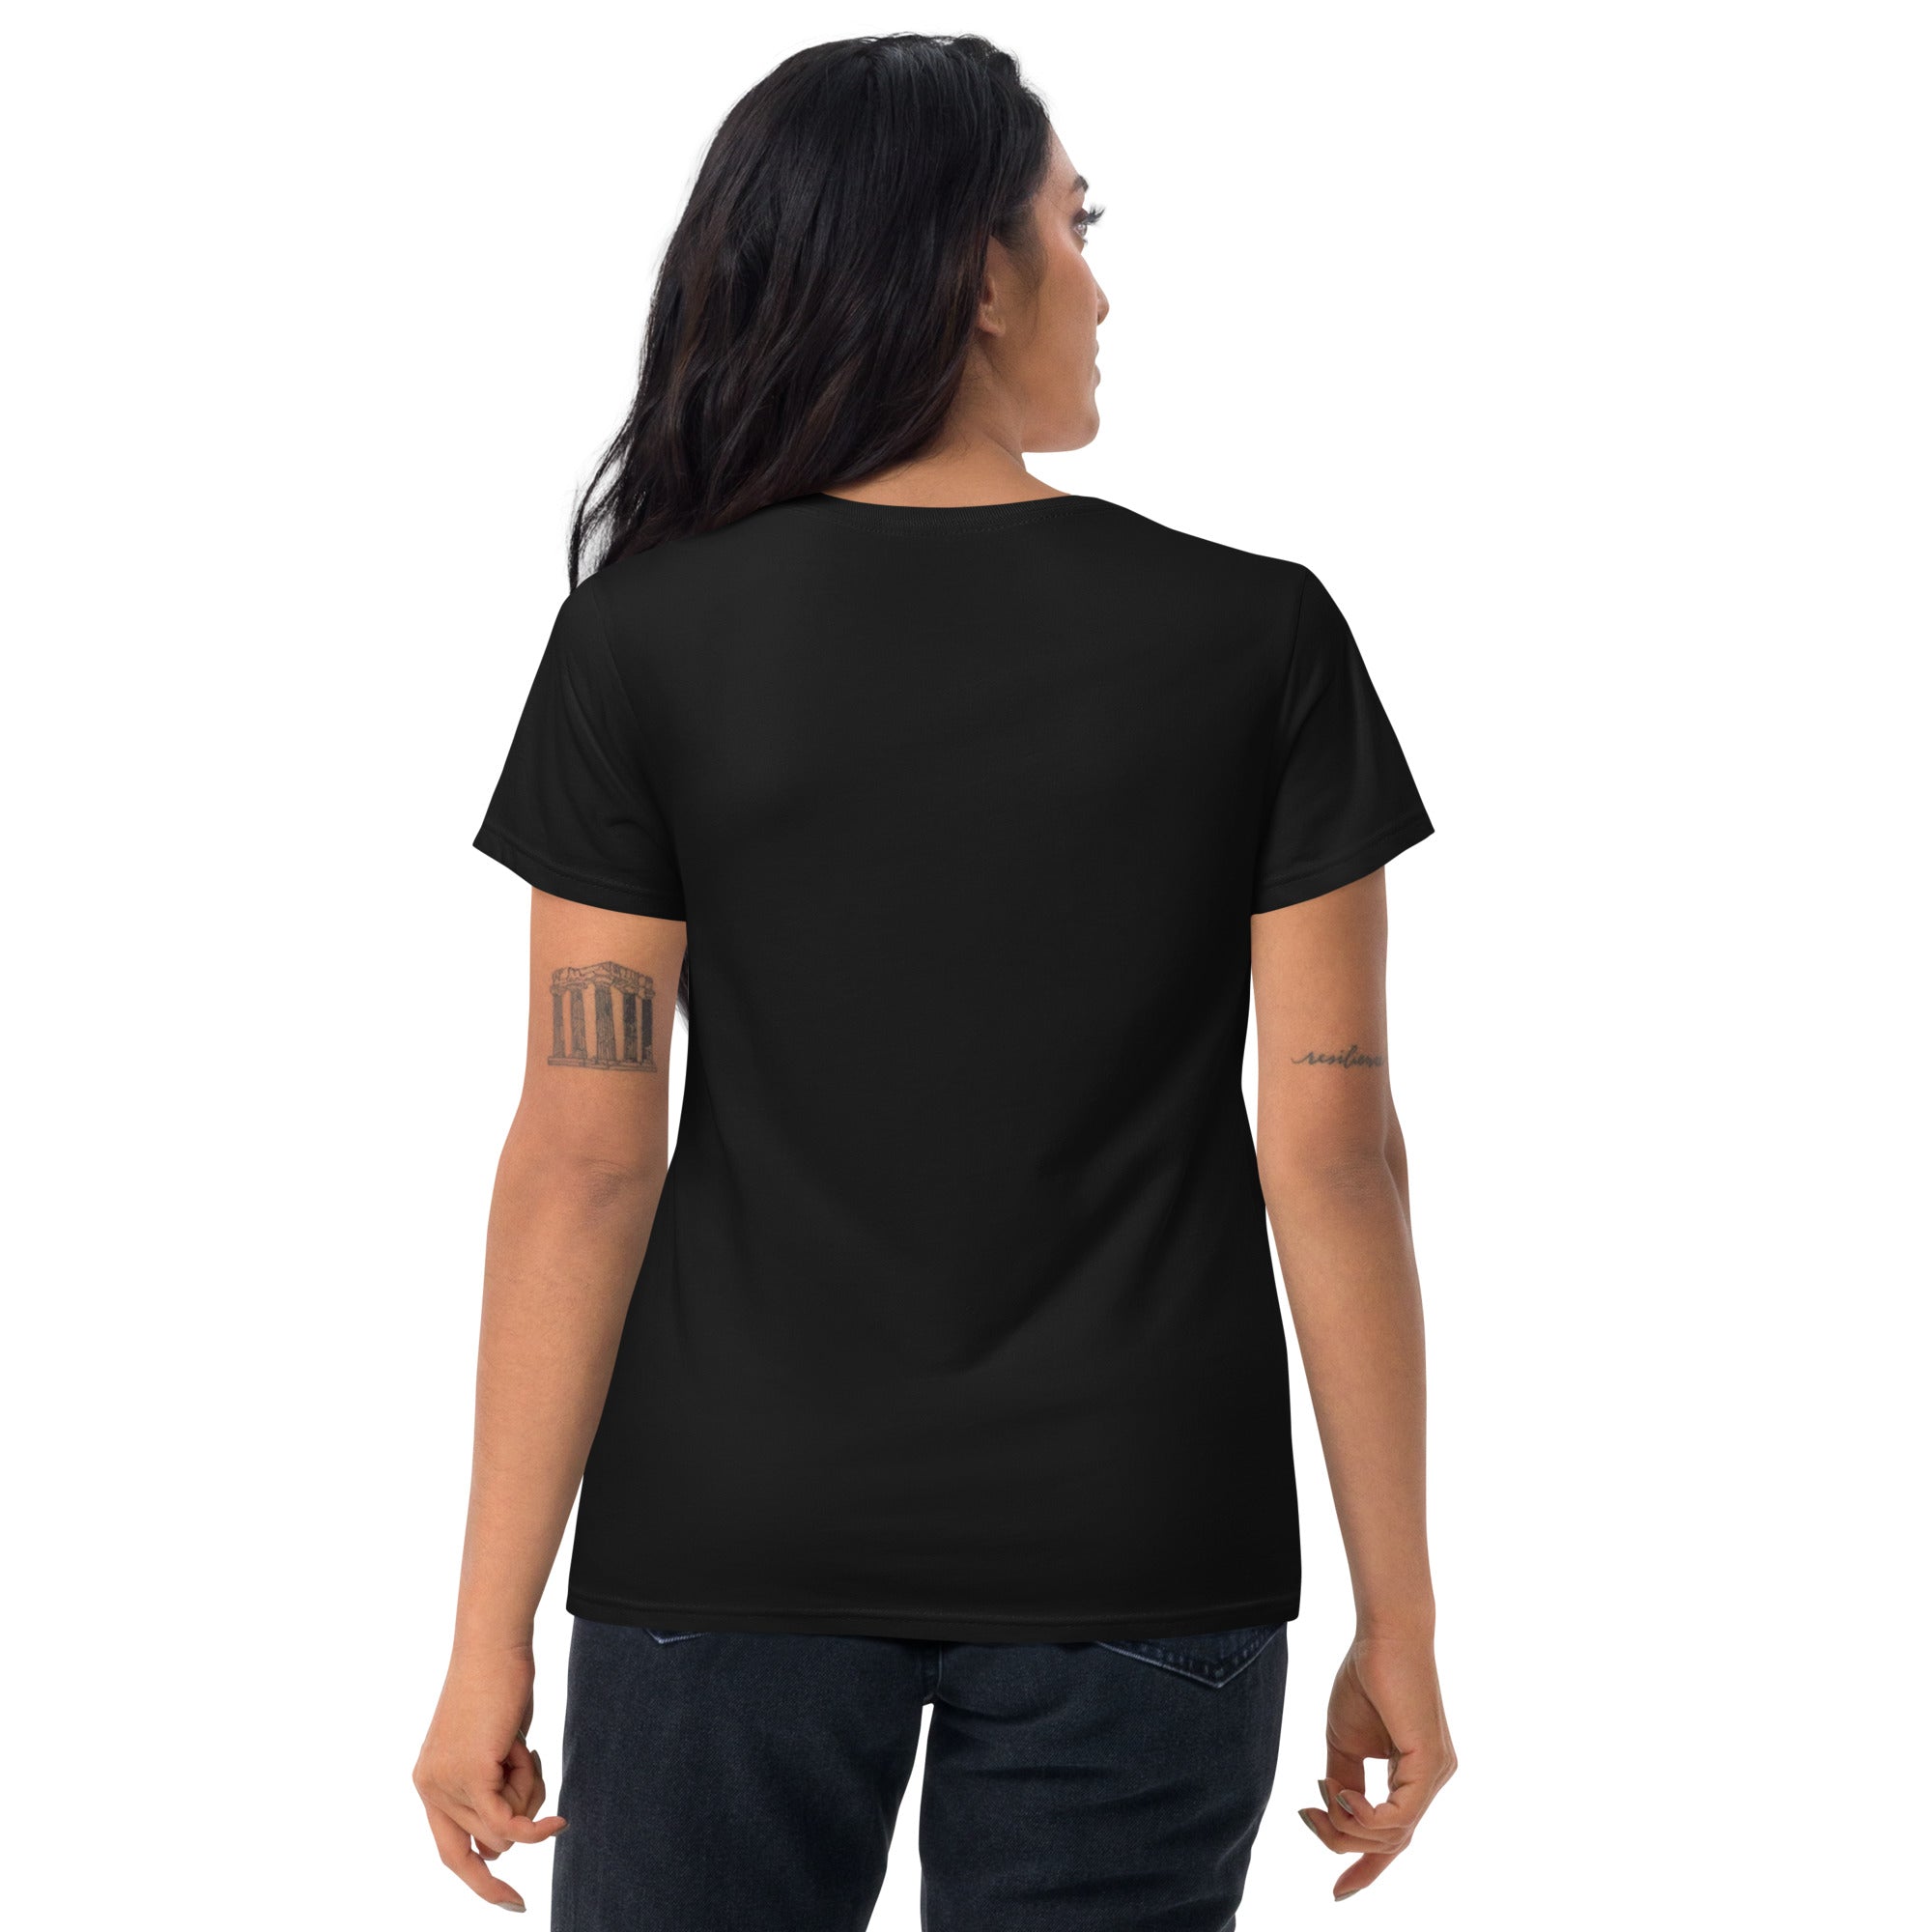 Red Melting Inverted Pentagram Black Metal Women's Short Sleeve Babydoll T-shirt